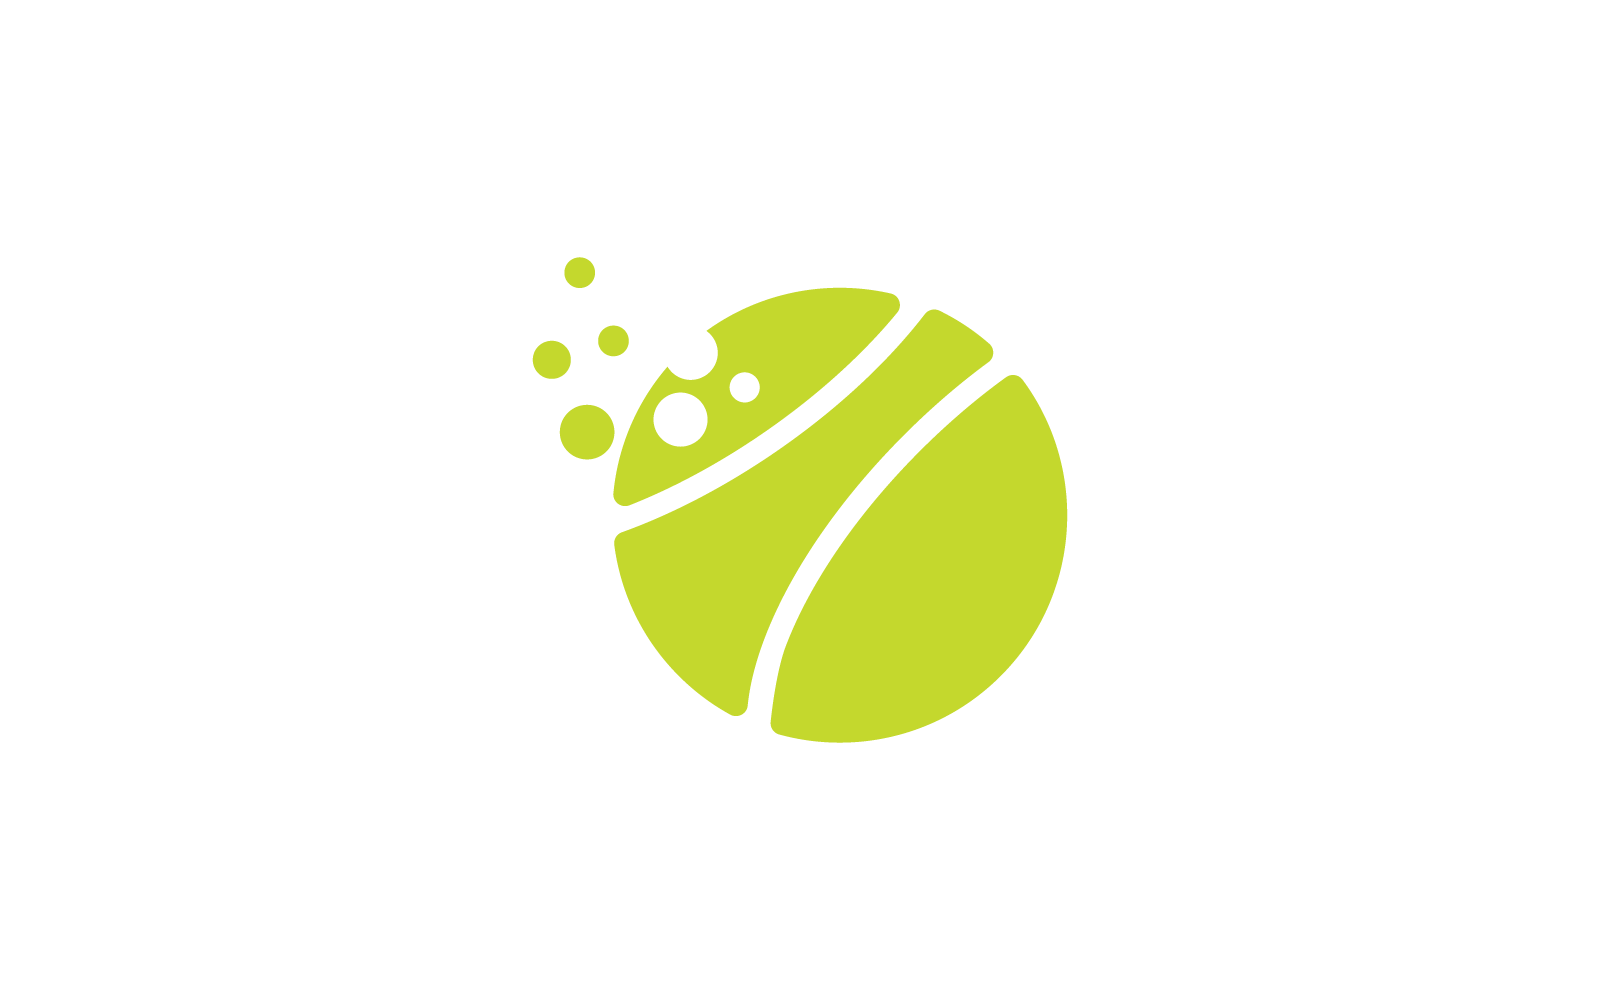 Tennis ball illustration design vector icon template